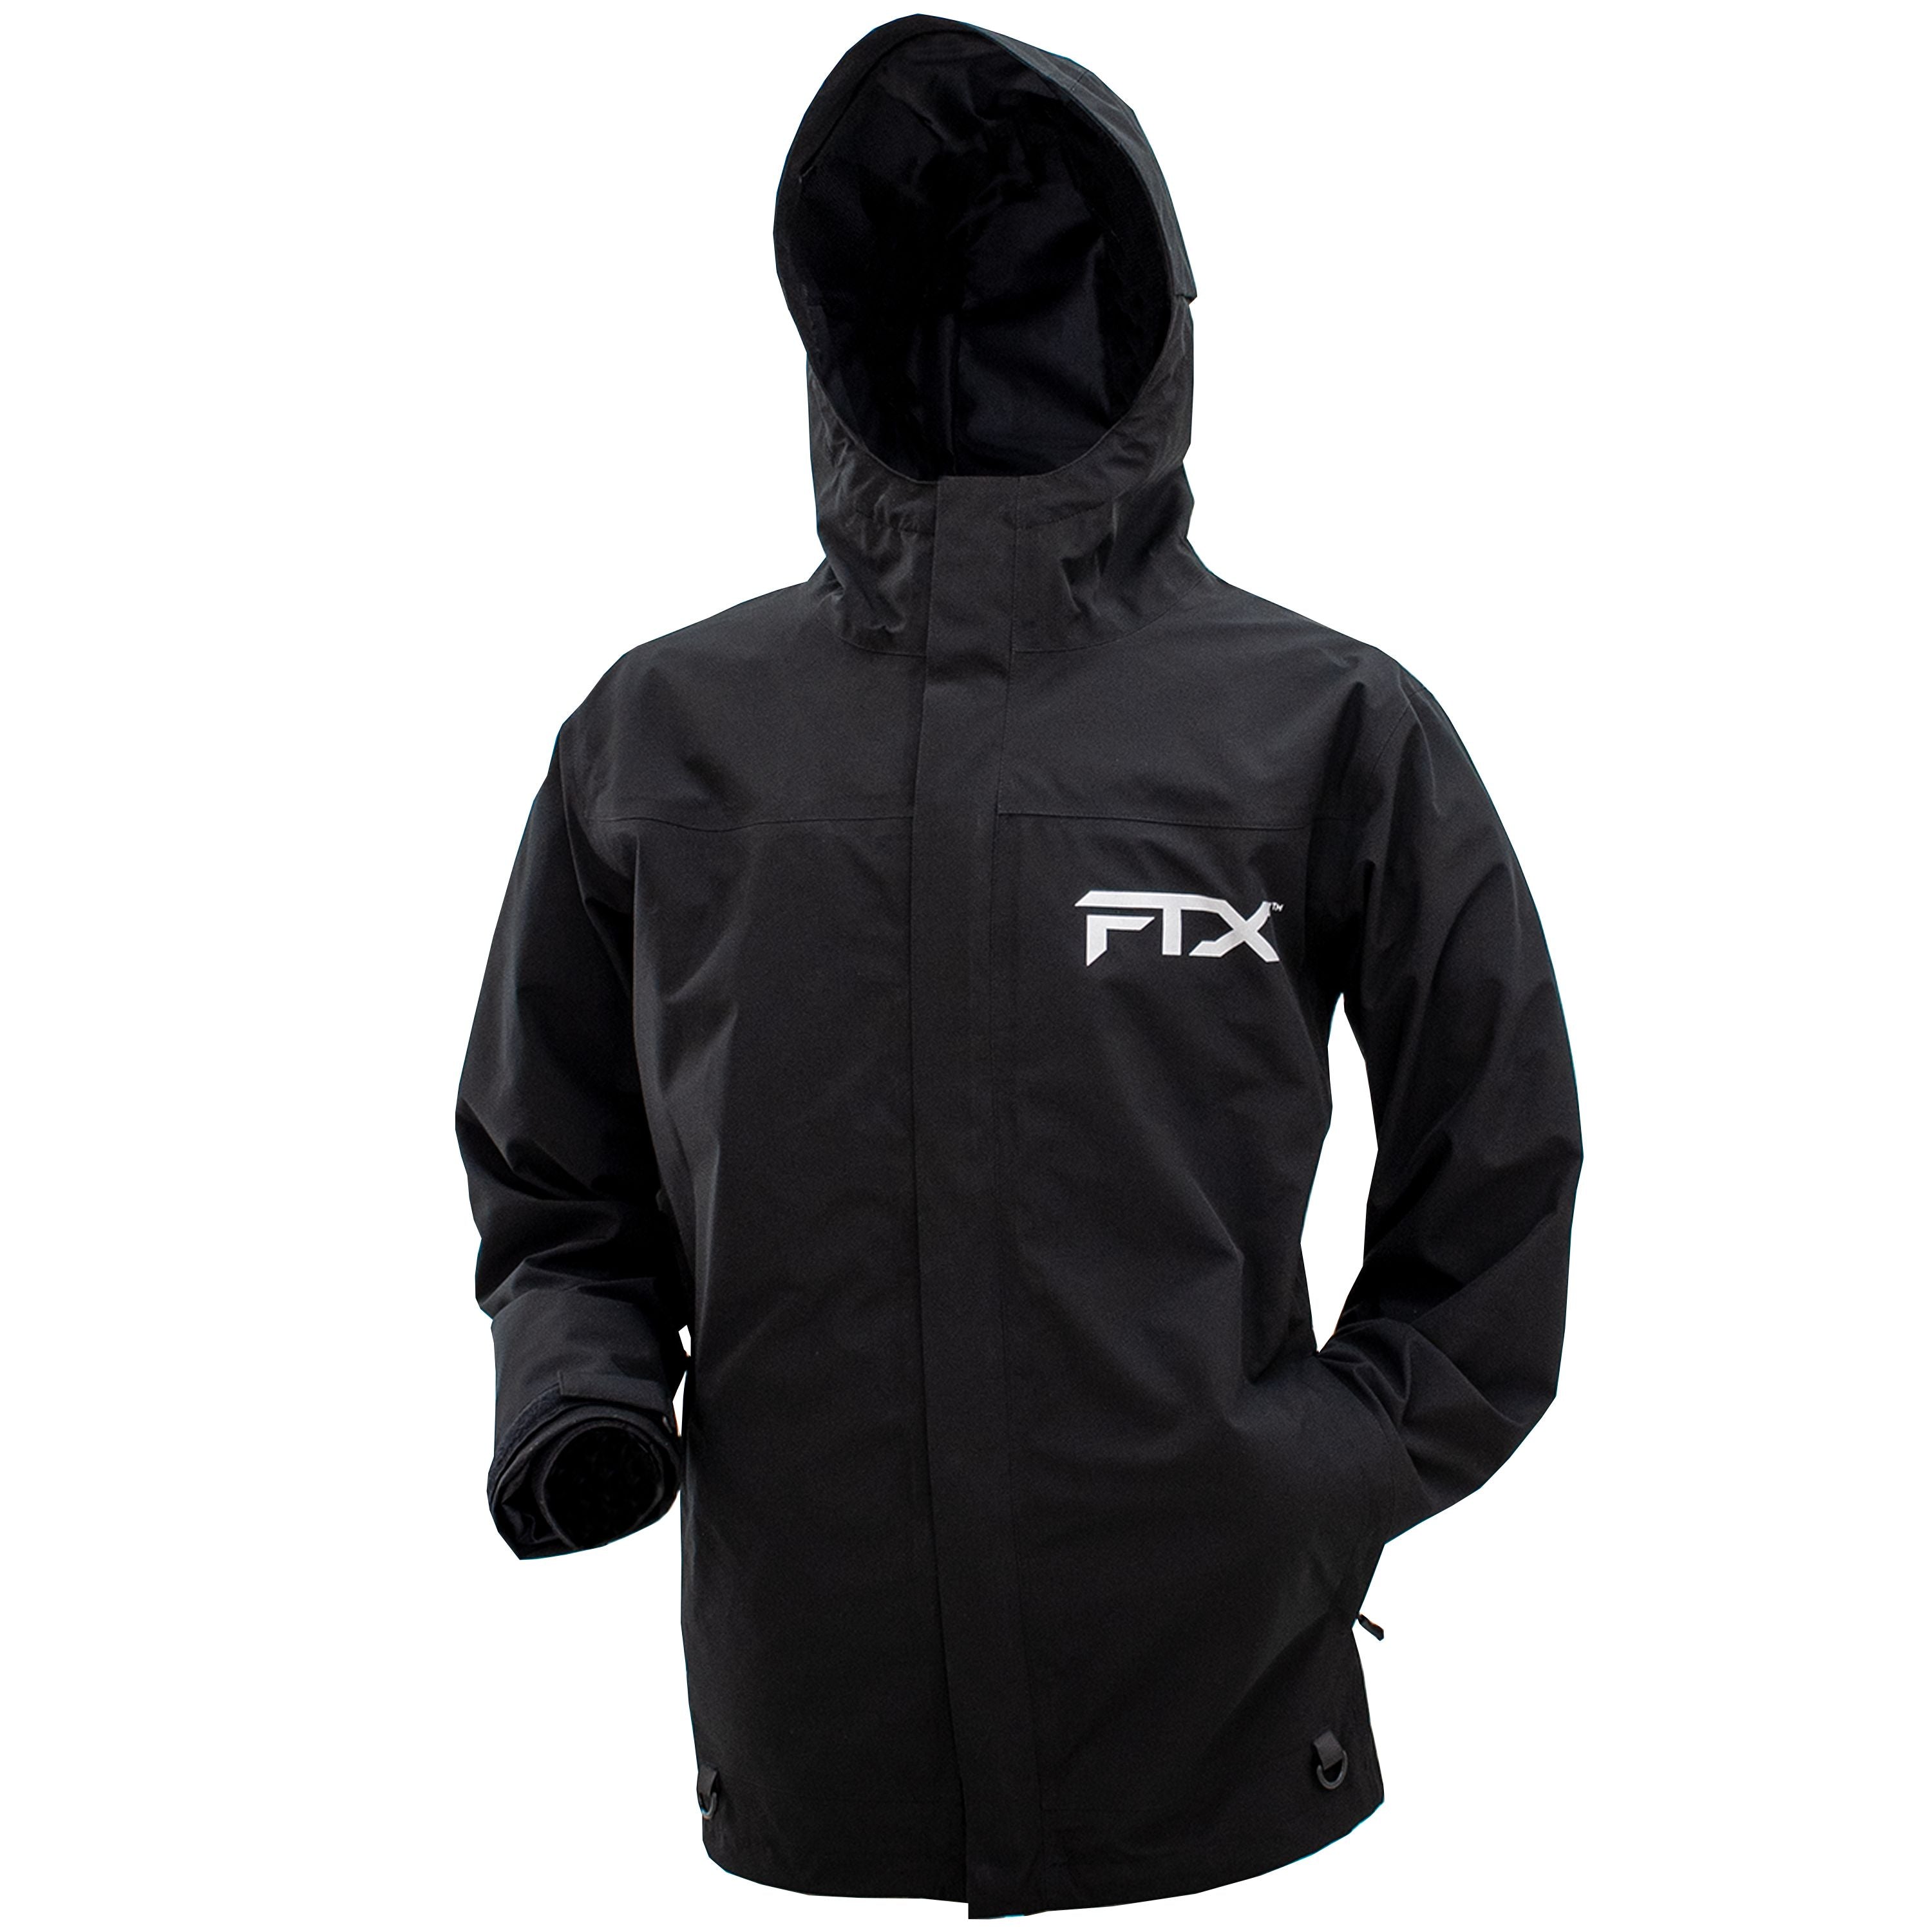 "FTX Armor" Rain jacket - Men's